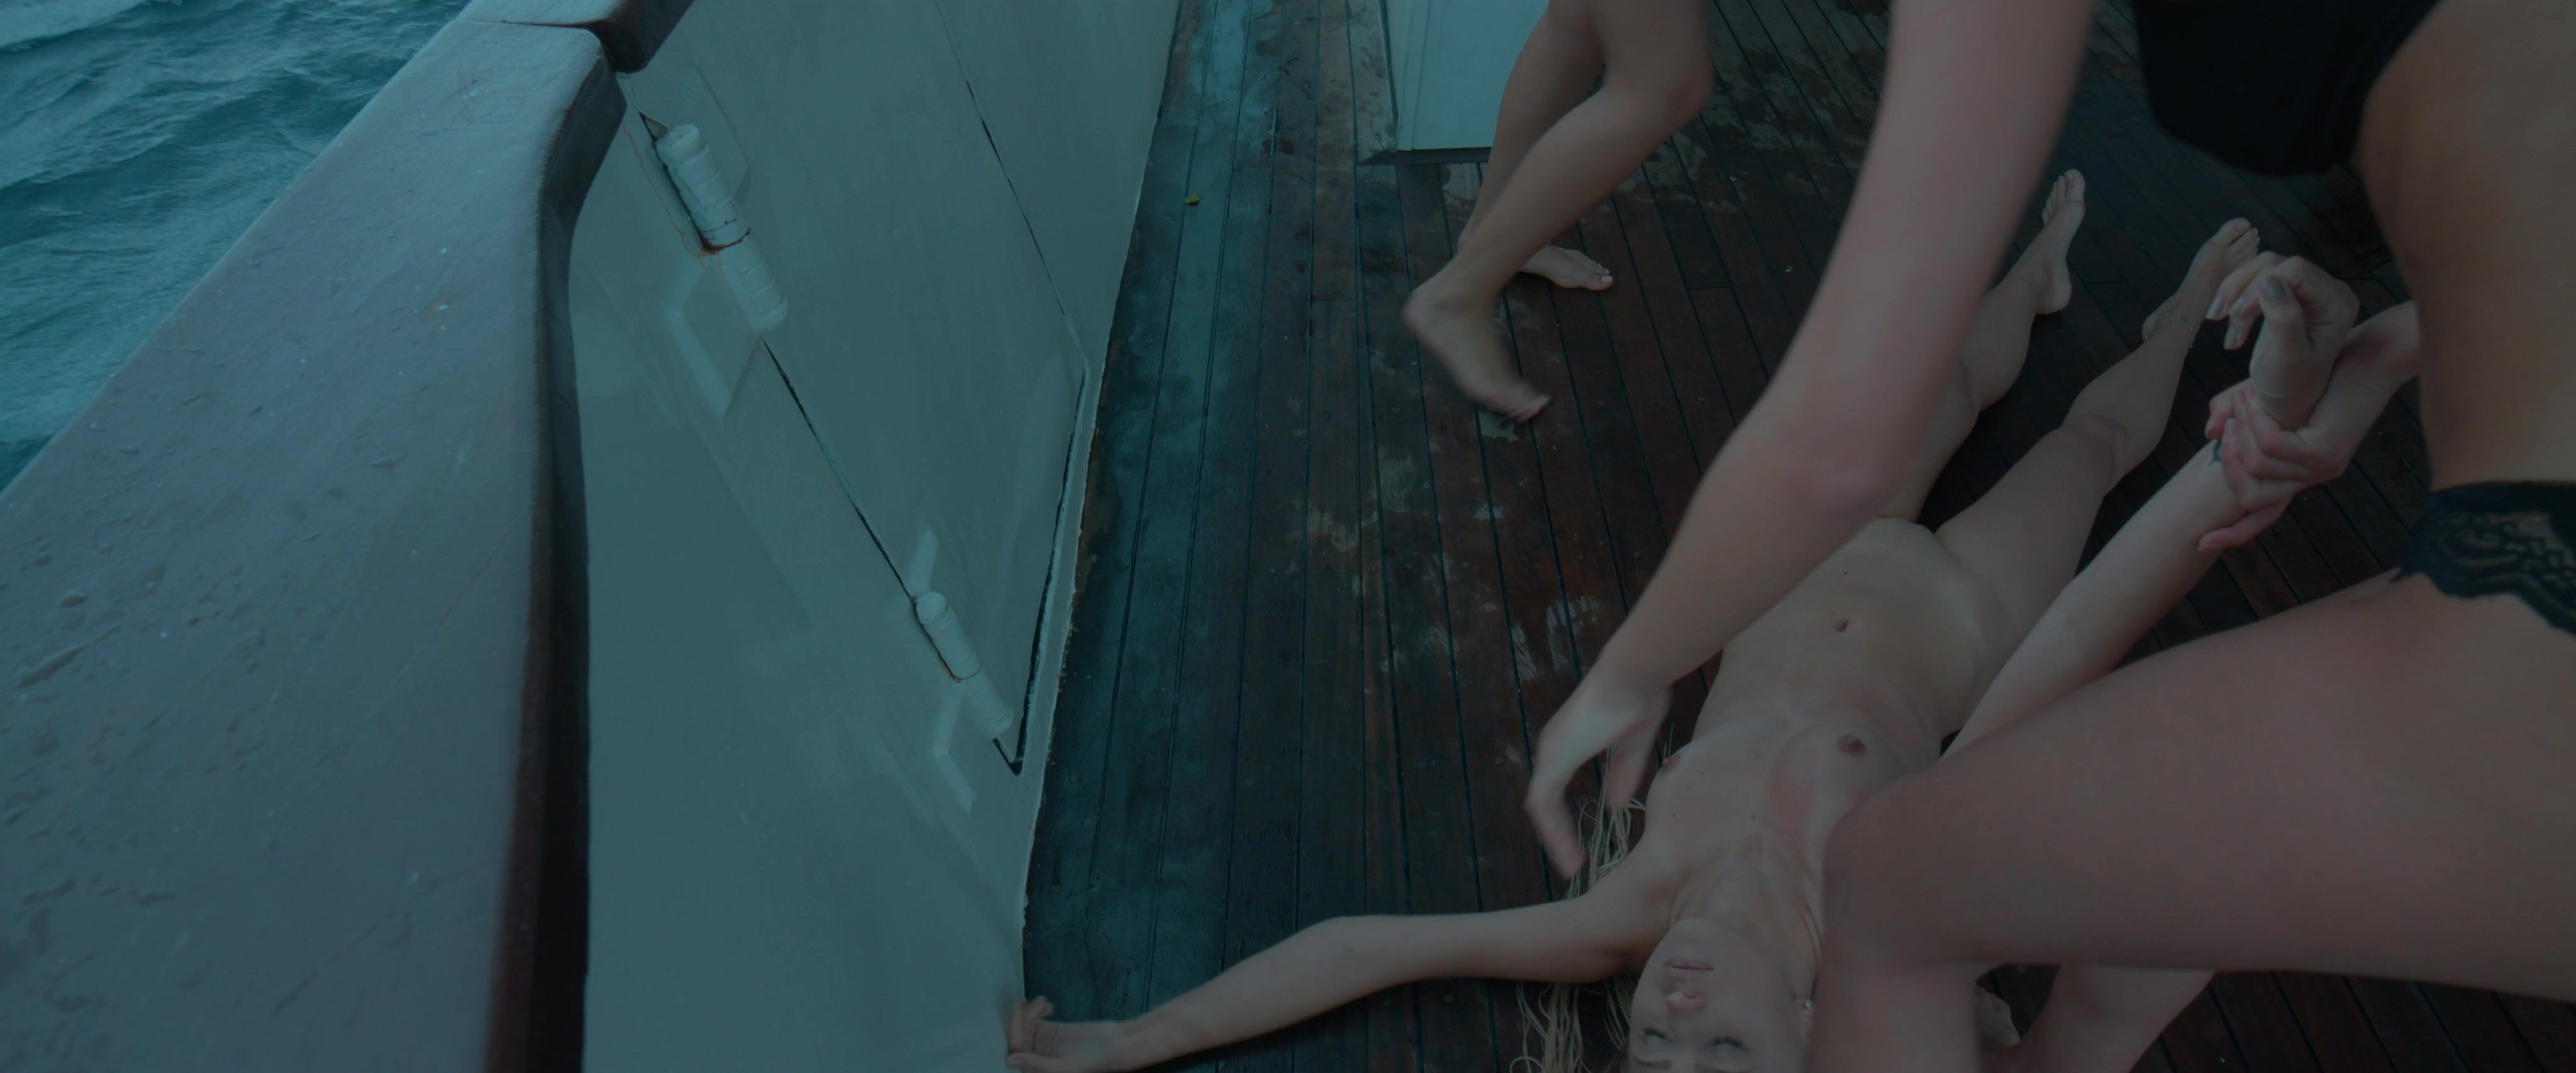 Putita Nude Art Movie - Hallway (Best Erotic Music) GayAnime